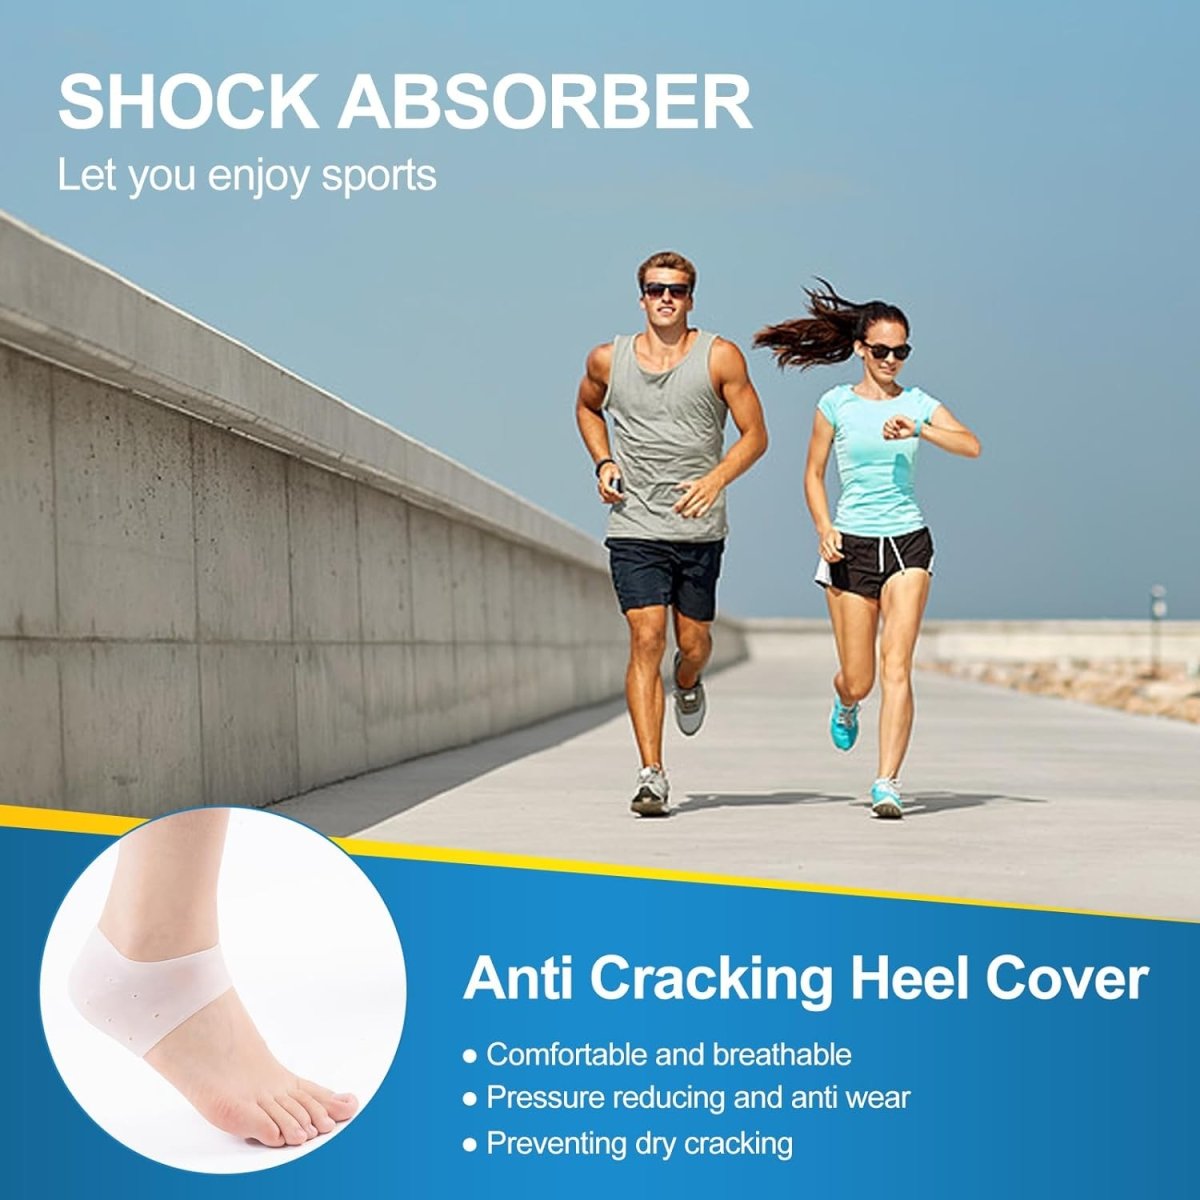 Anti cracking heel cover